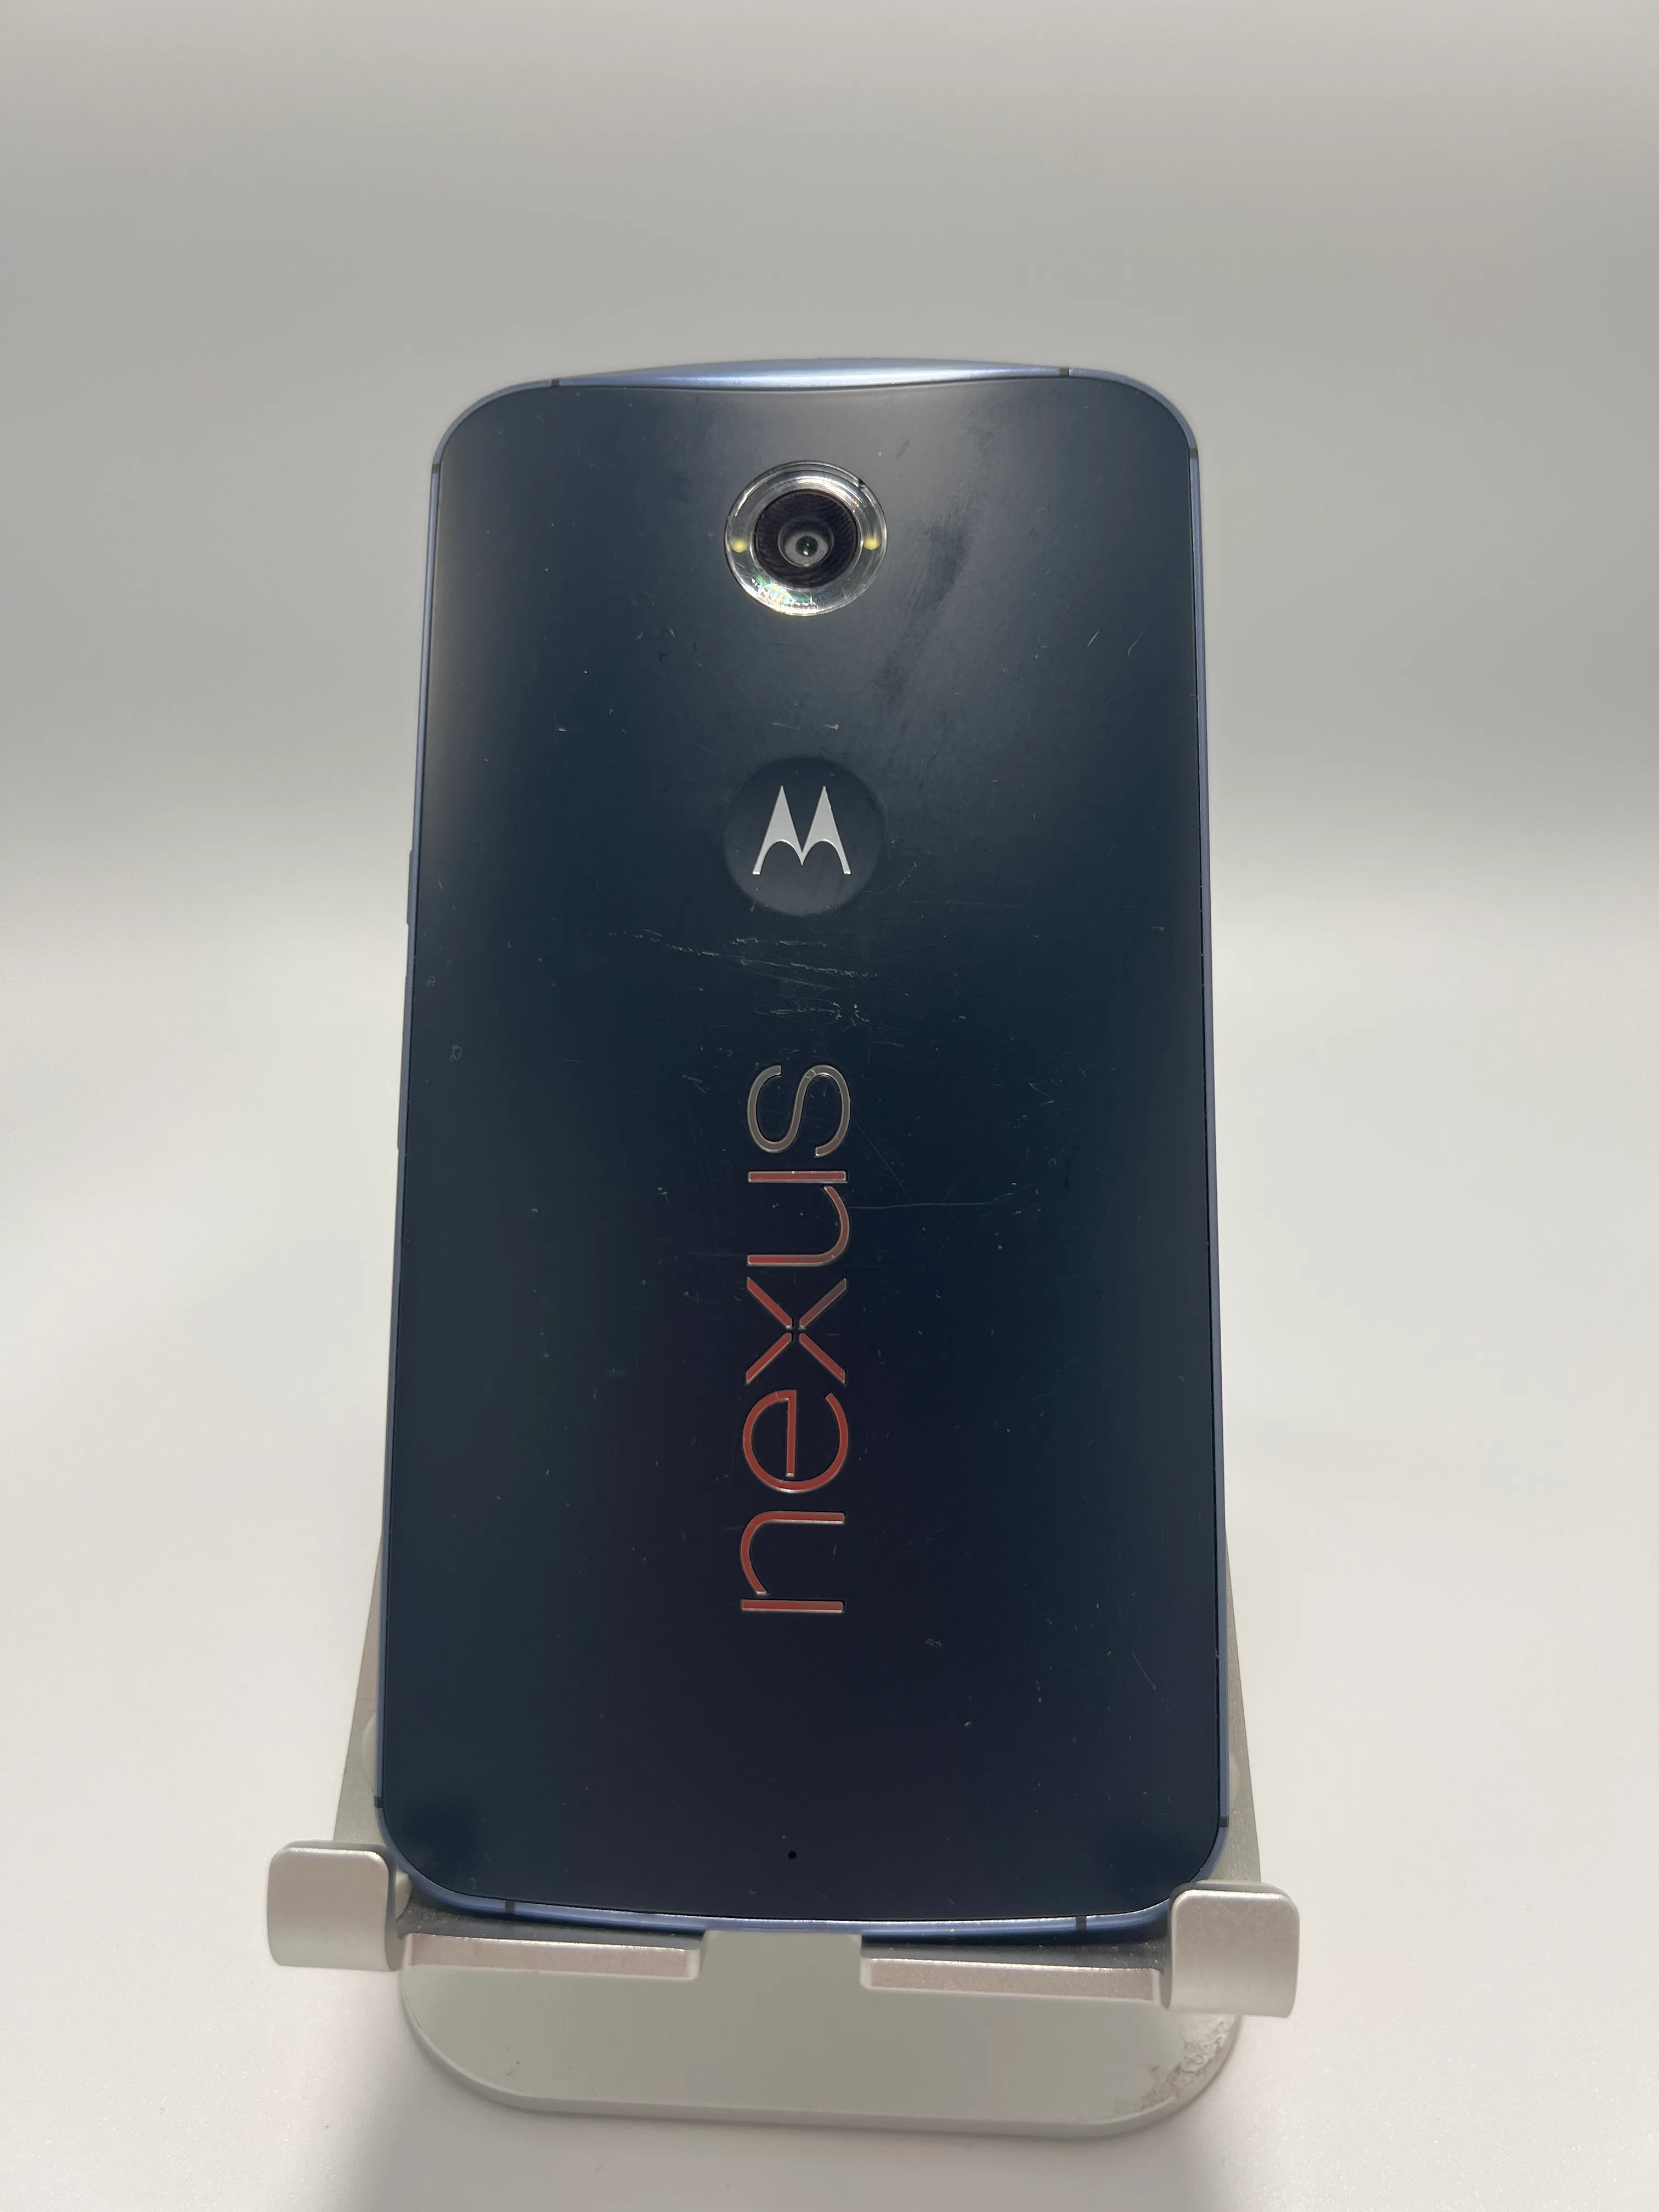 Nexus 6 media